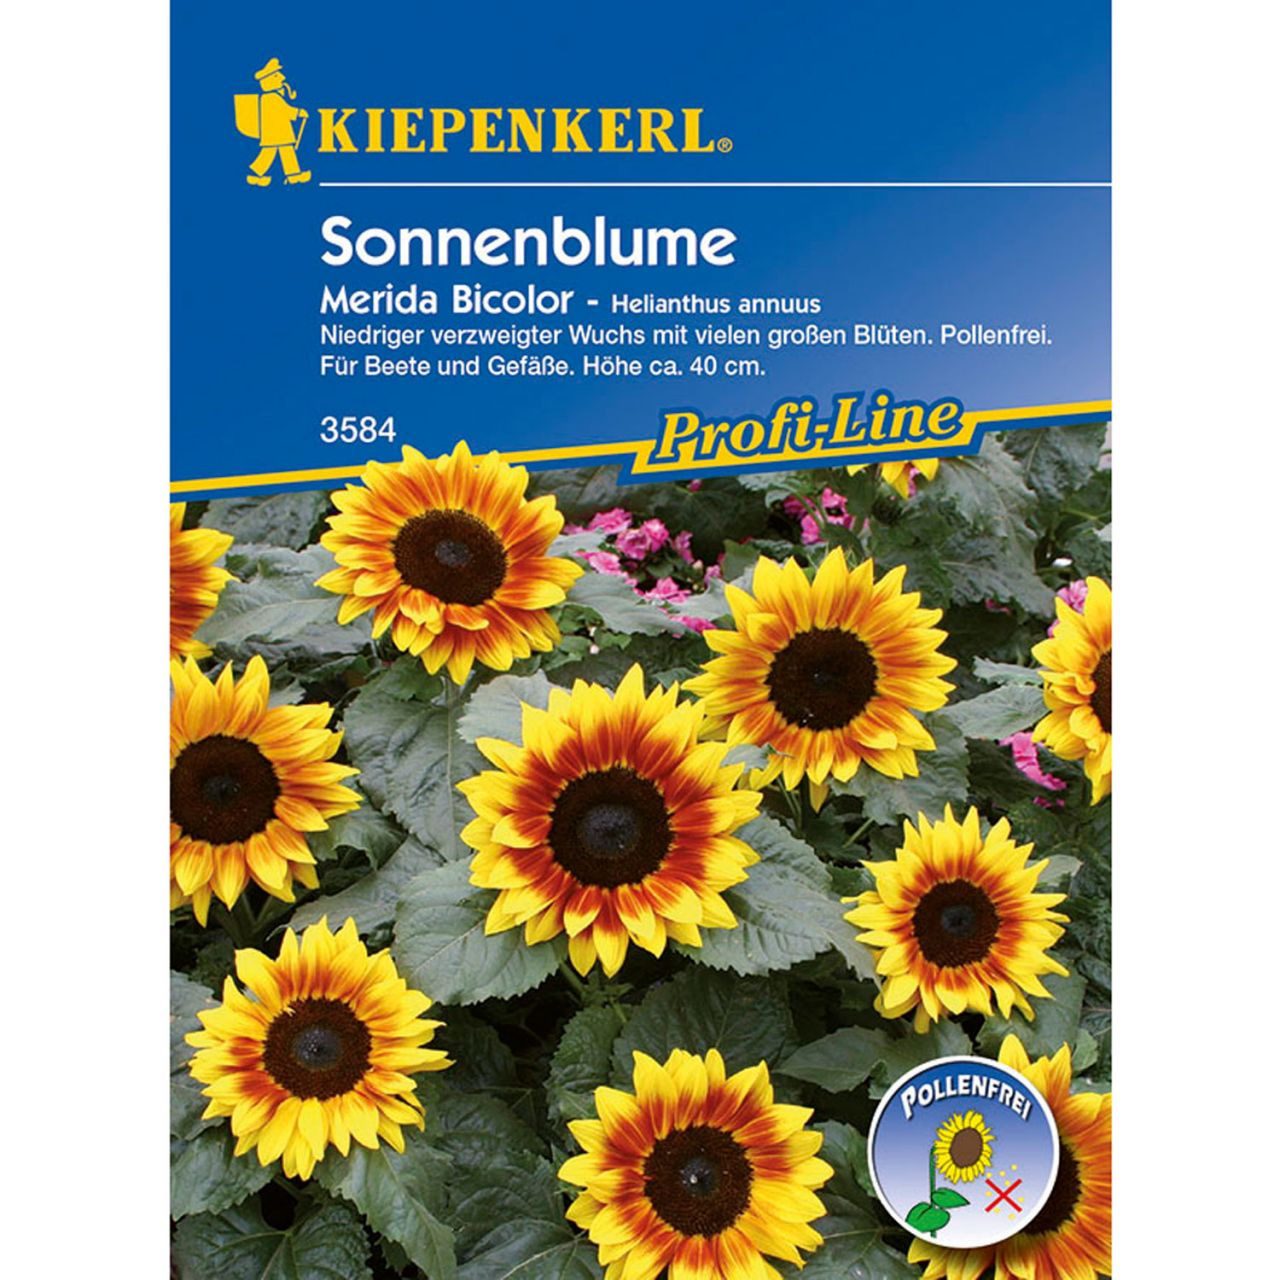 Kategorie <b>Blumensamen </b> - Sonnenblume 'Merida Bicolor' - Helianthus annuus